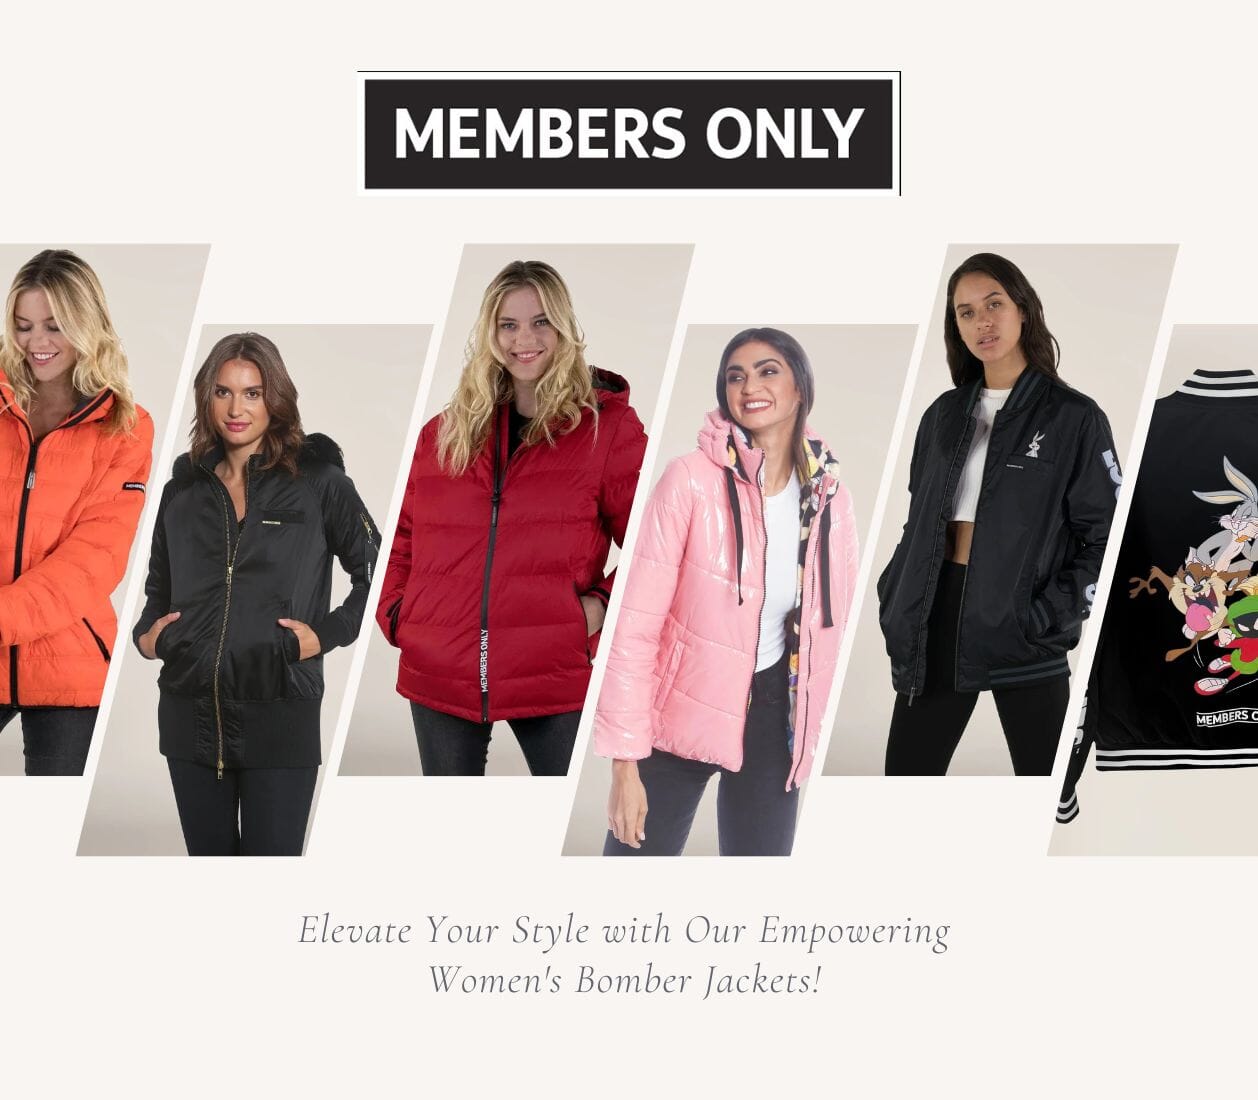 Women's Bomber Jacket - 6 Chic Ways to Style It